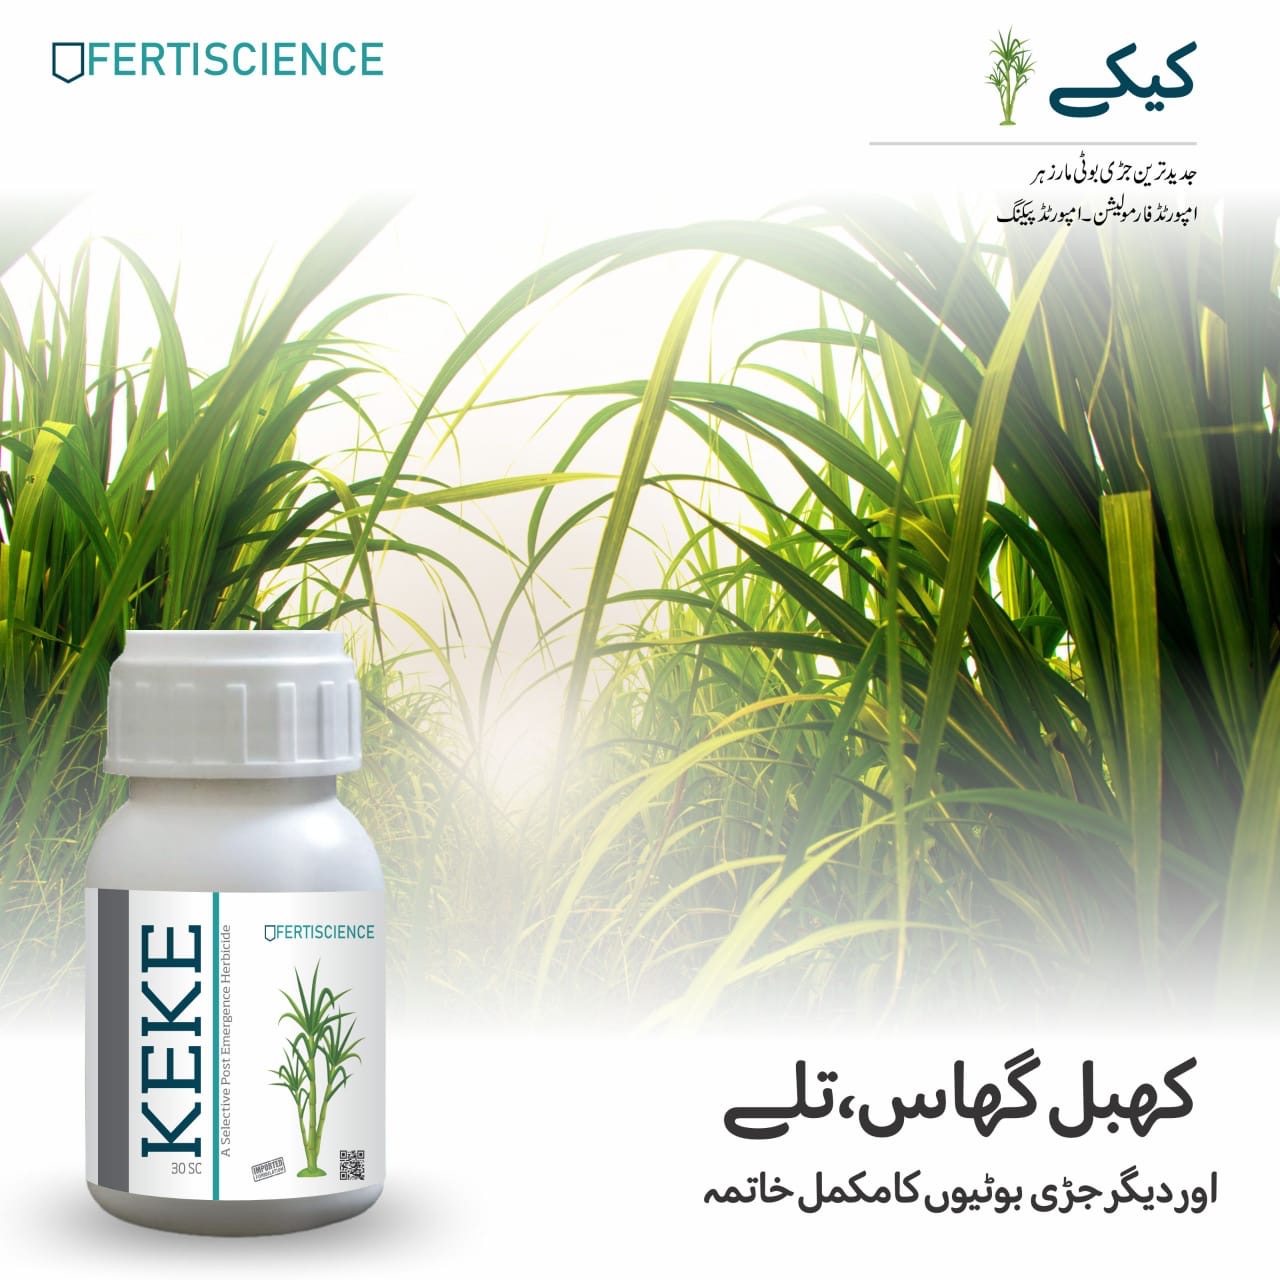 KEKE 30SC 35ML Topramezone post emergence Herbicide for Sugarcane and Maize Crop Fertiscience 